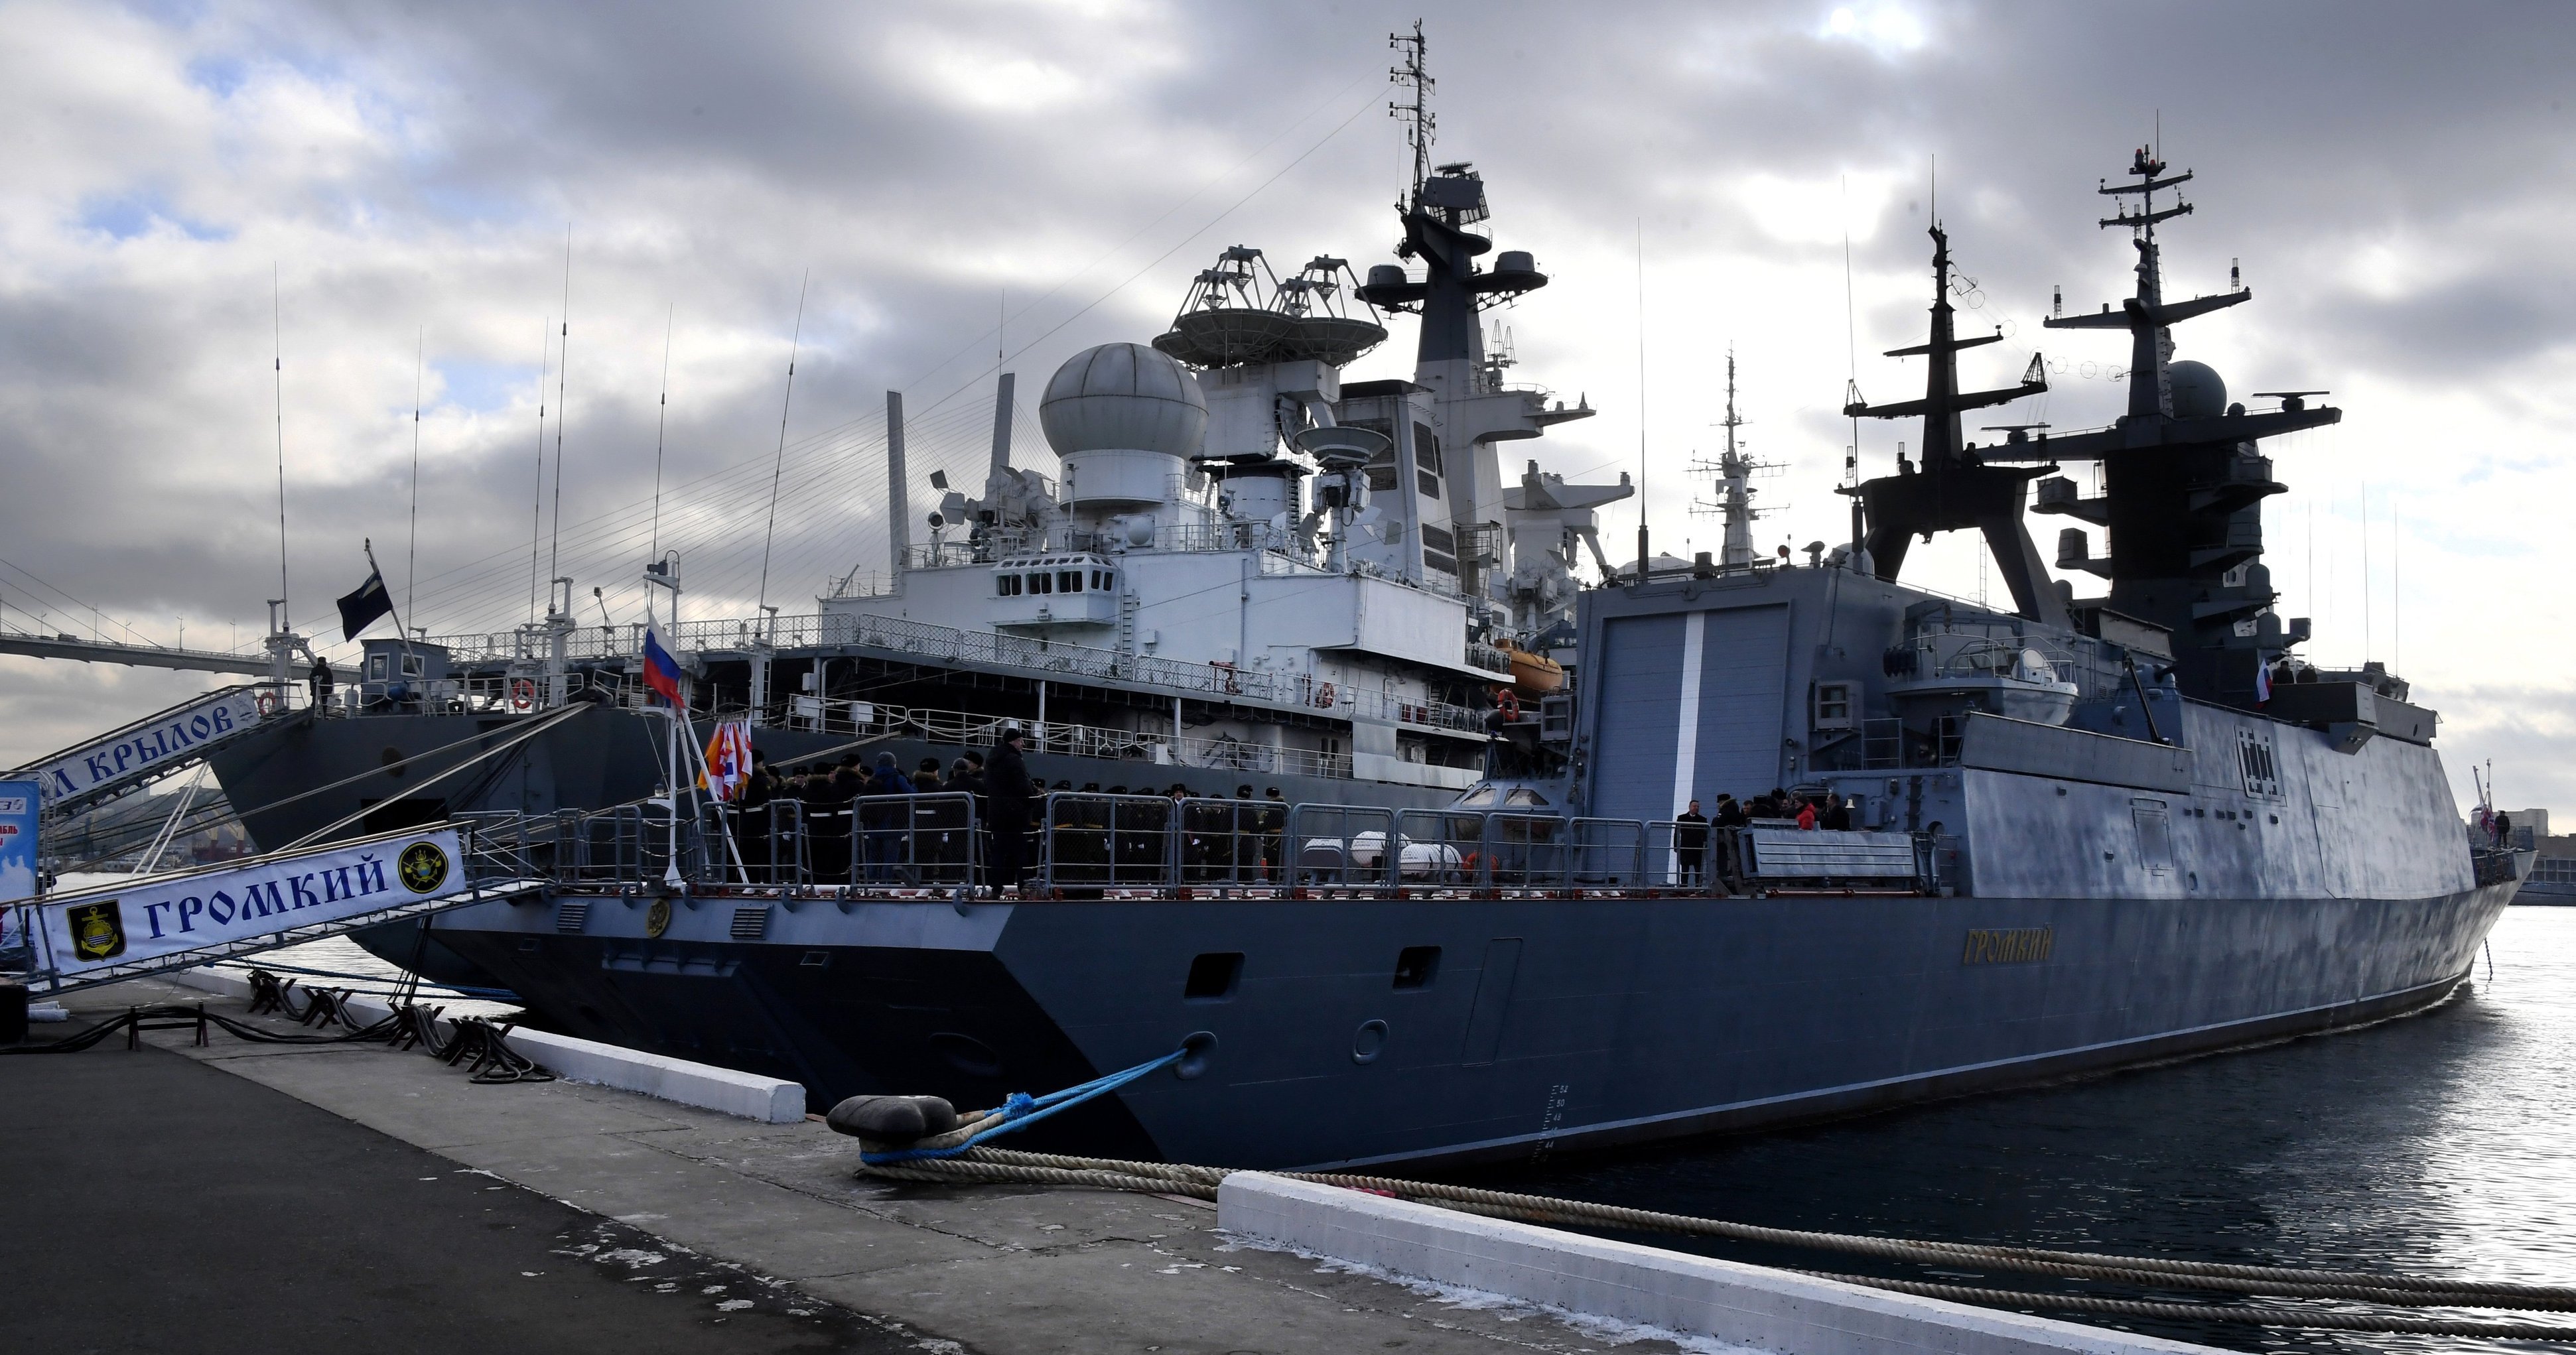 Корвет "Громкий" Тихоокеанского флота, на котором был поднят военно-морской Андреевский флаг